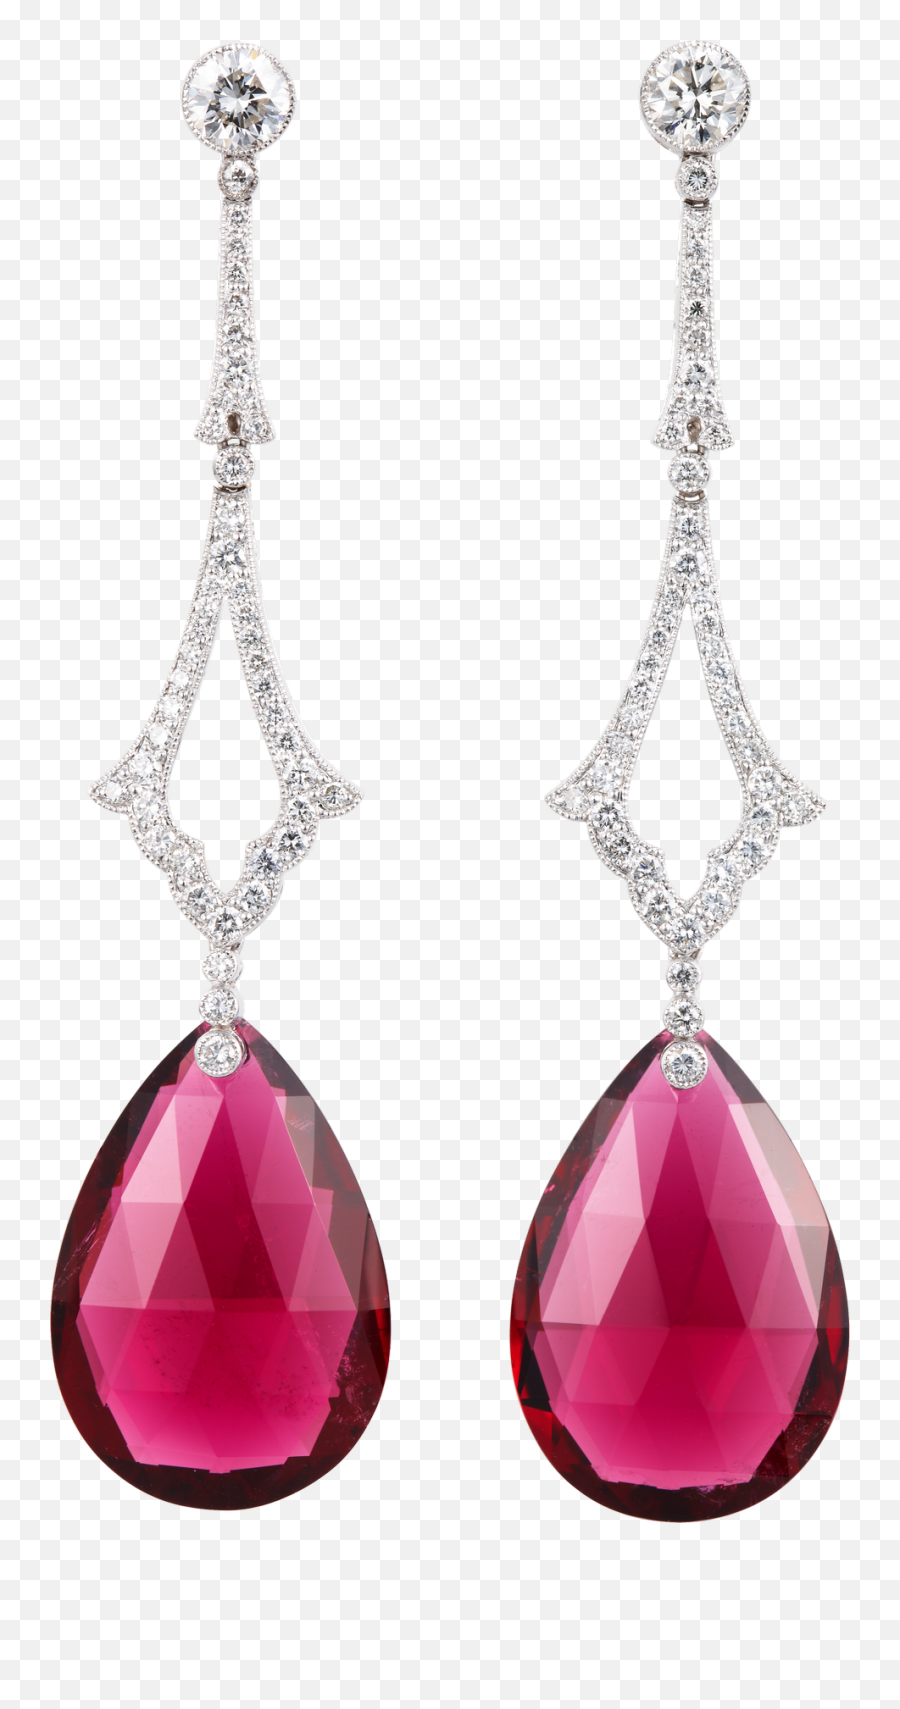 Diamond Earrings Png Image - Transparent Background Earring Png,Diamond Earring Png